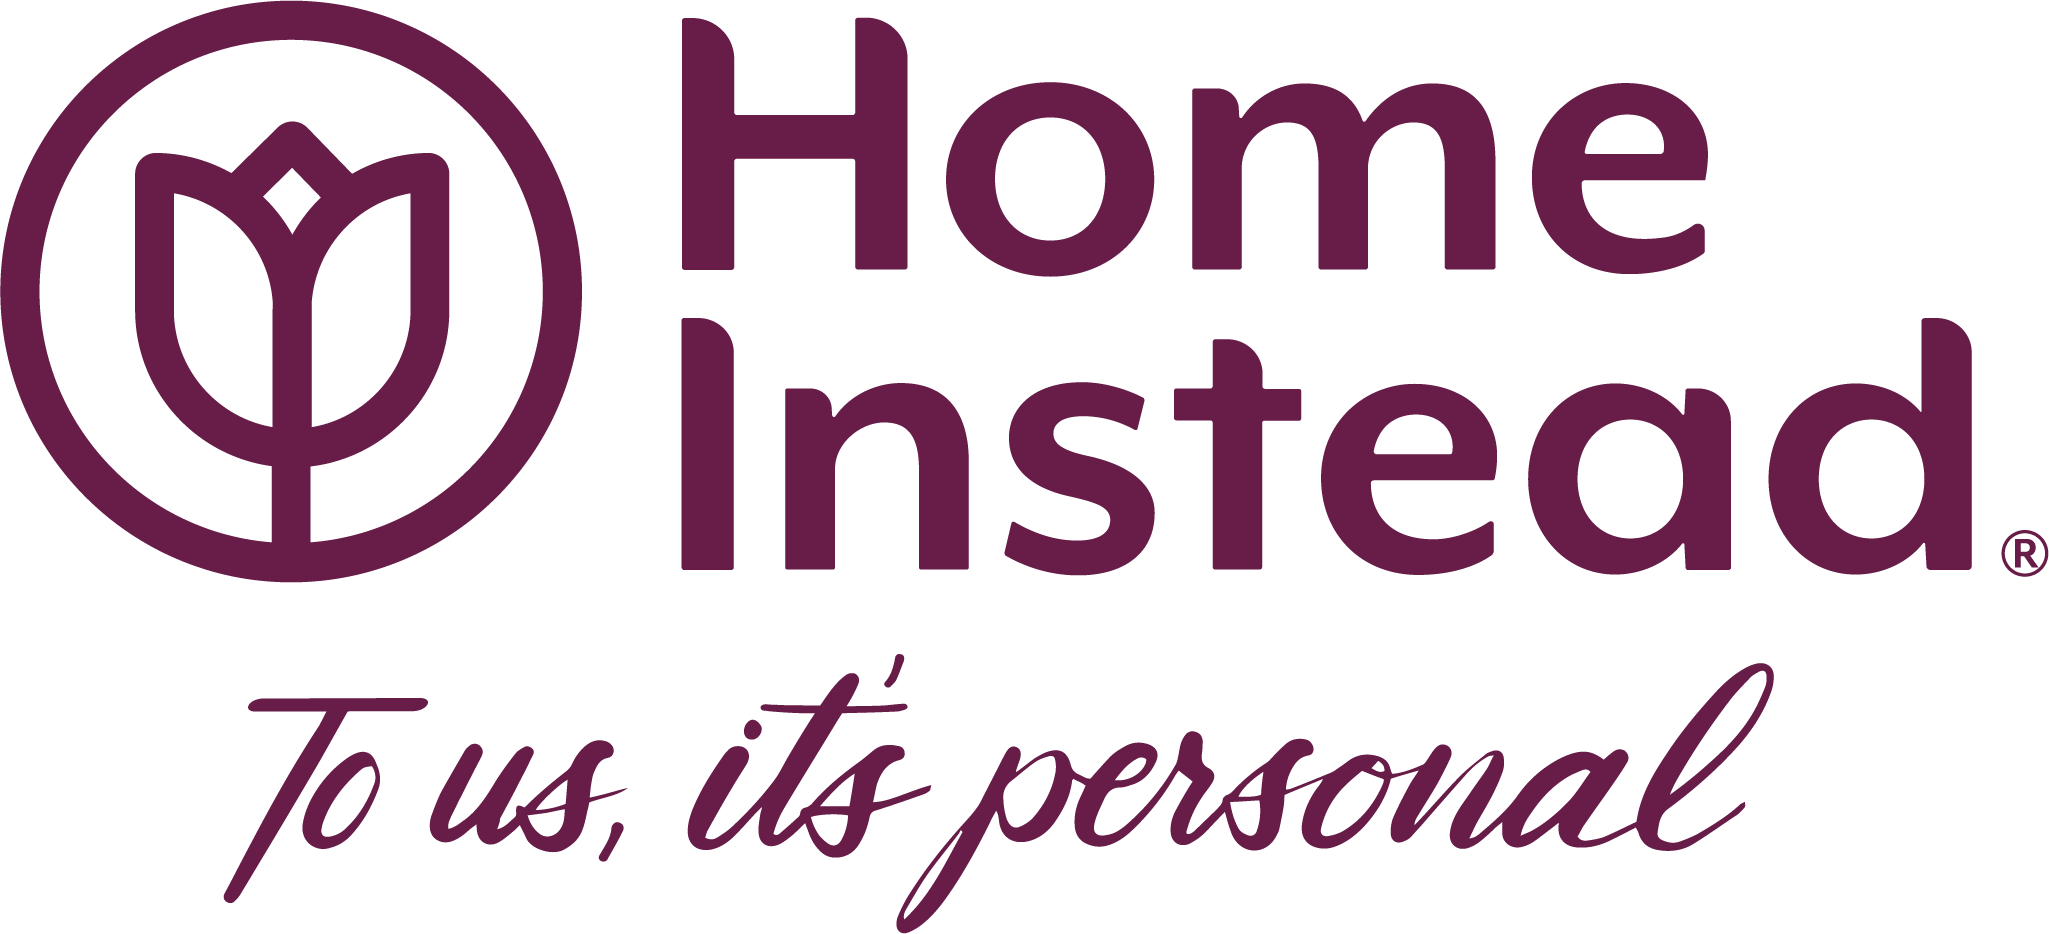 Home Instead Northshore logo